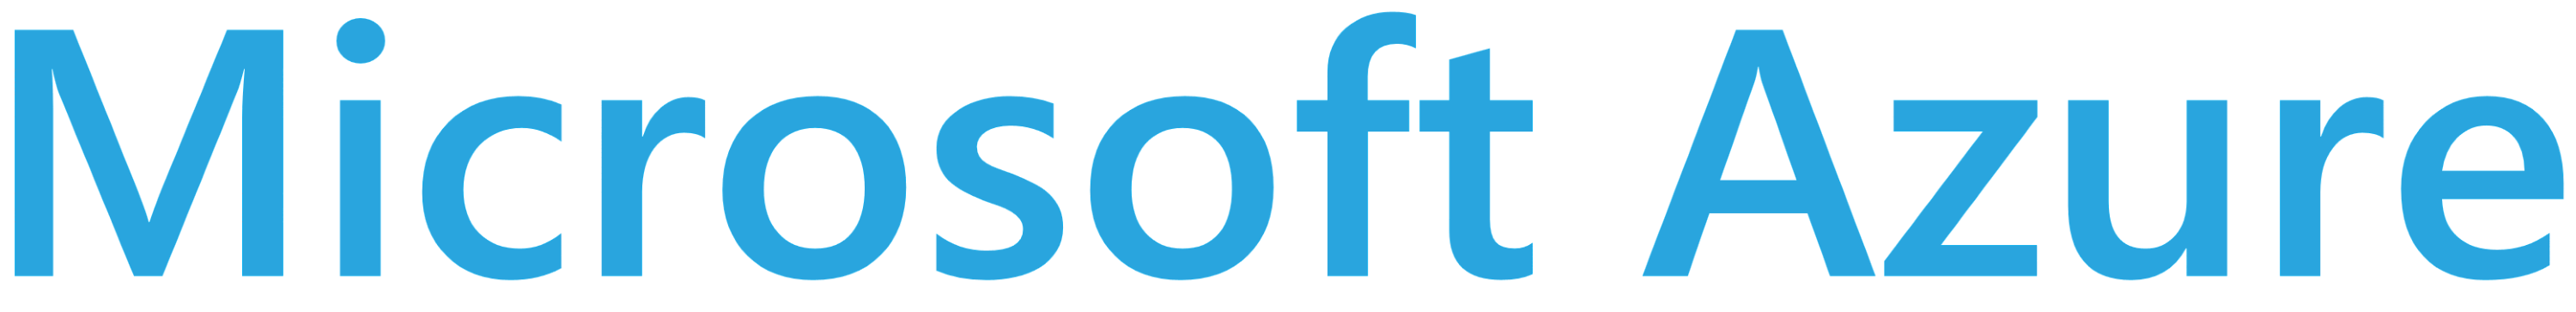 Microsoft Azure logo, logotype